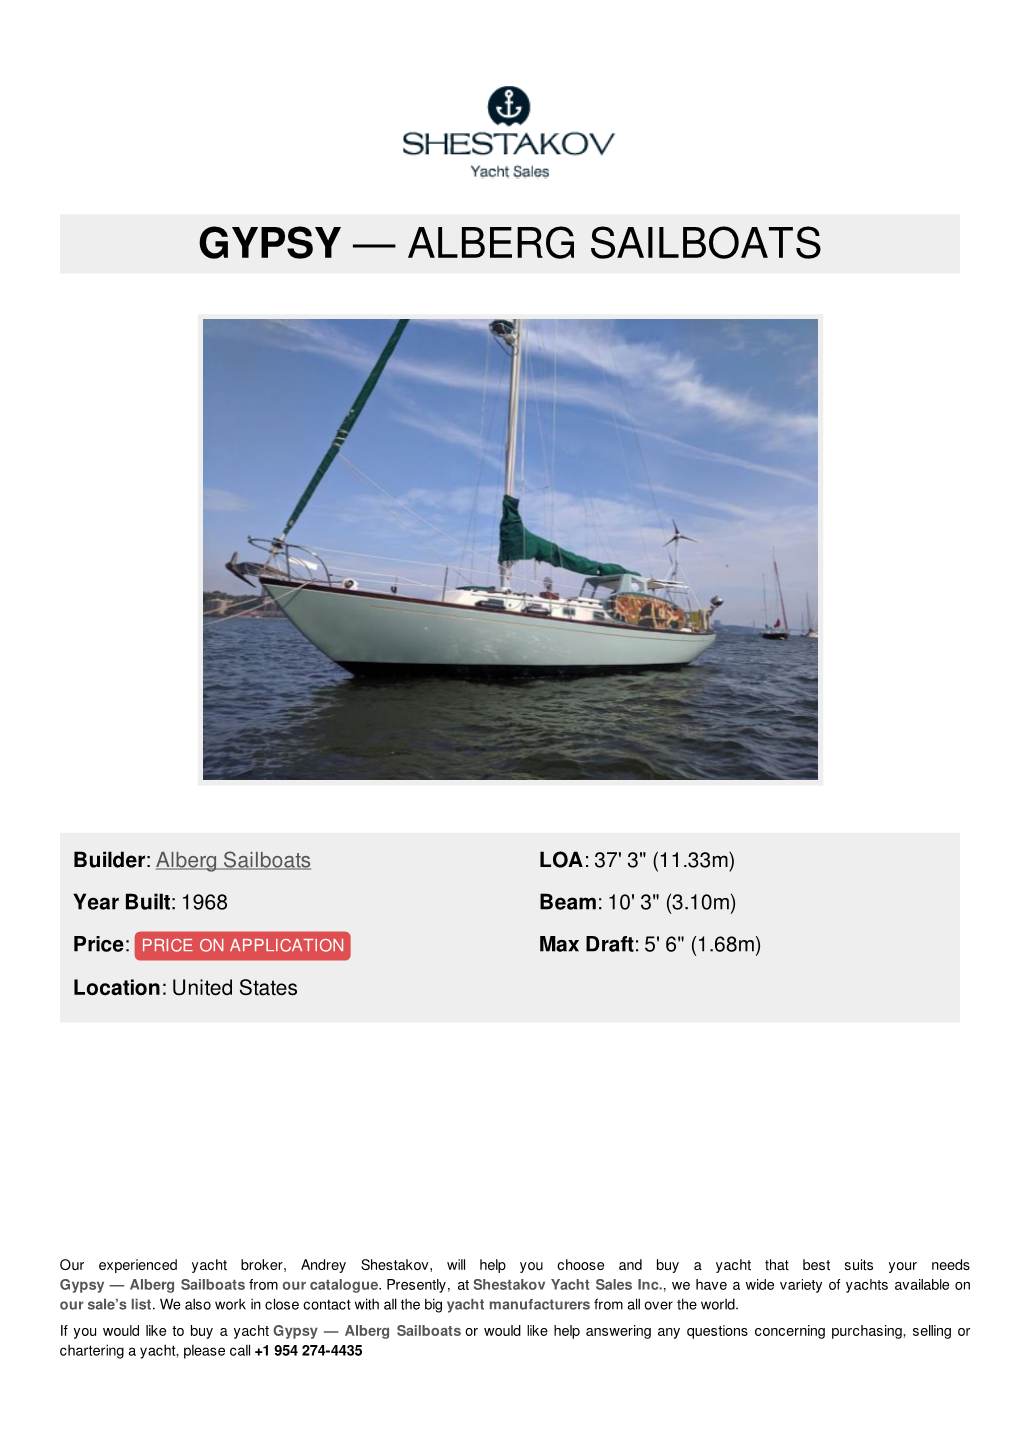 Gypsy — Alberg Sailboats